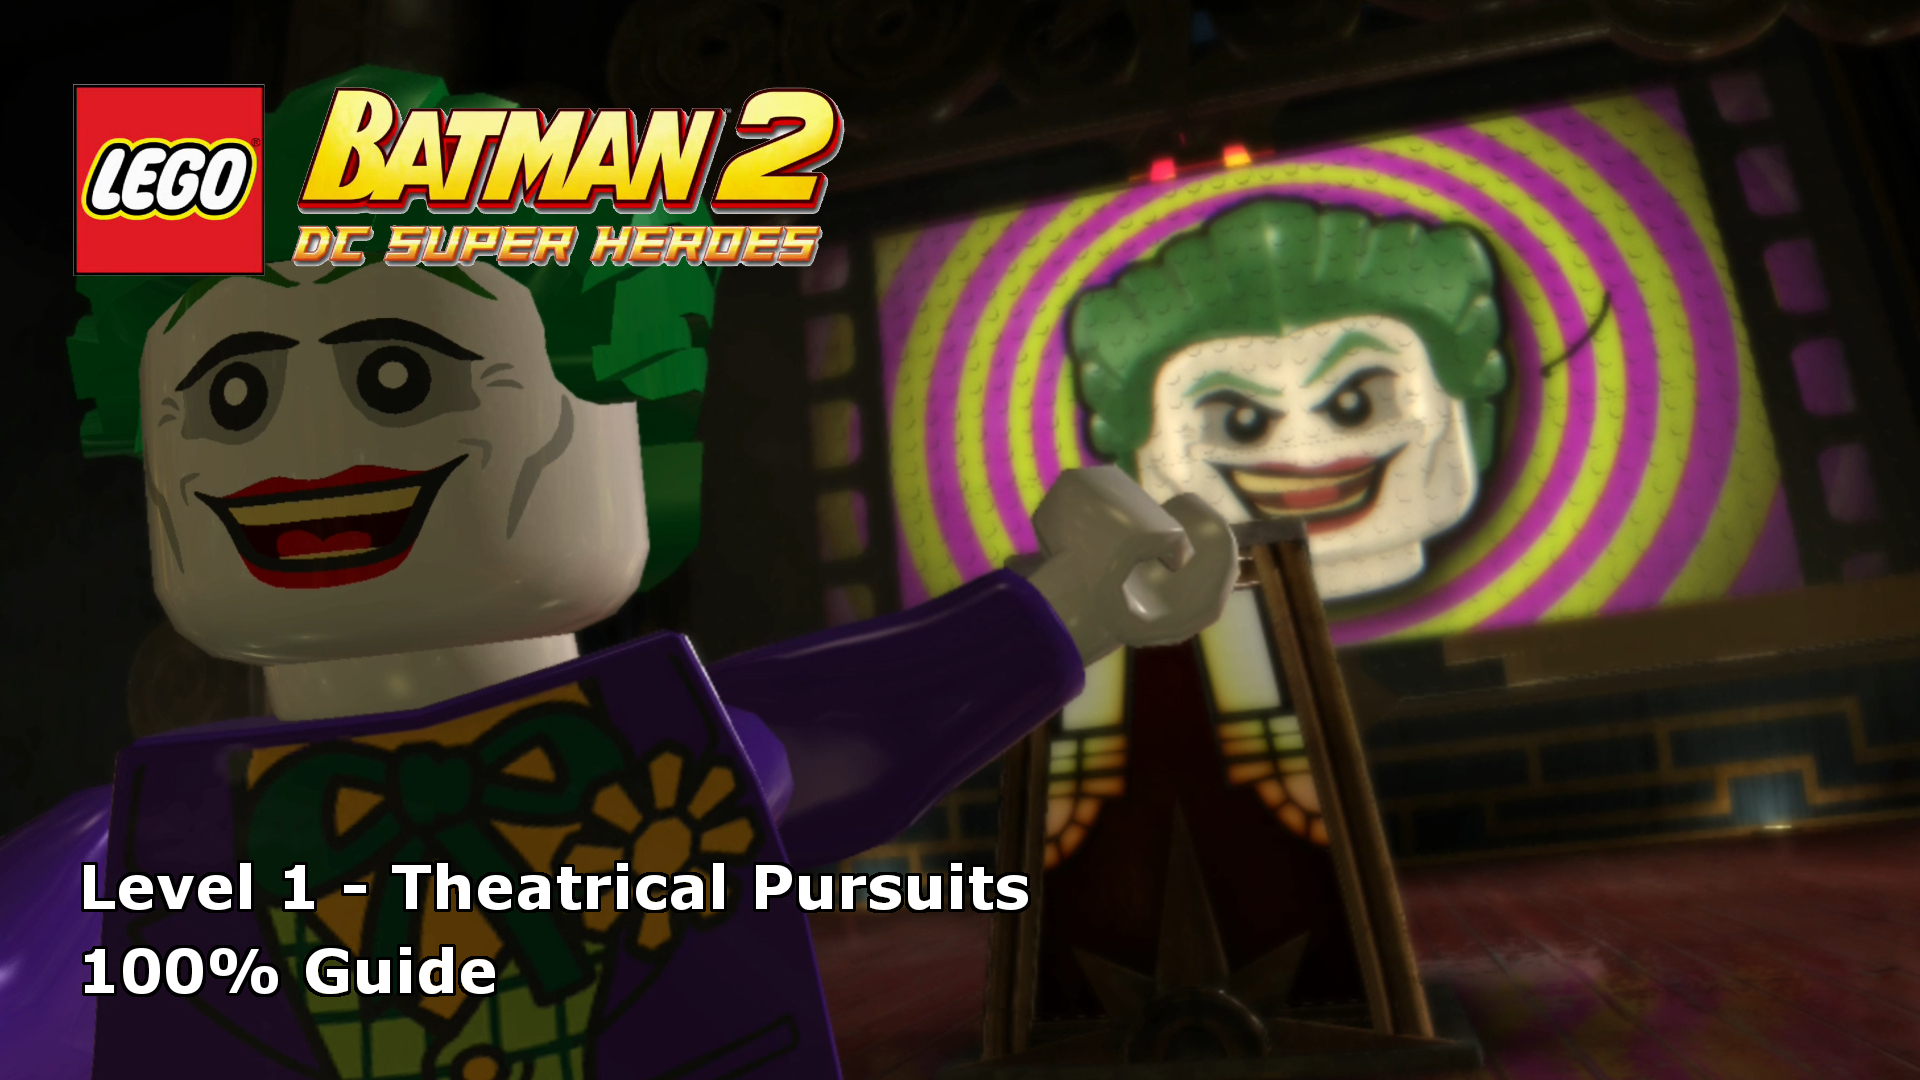 23++ Batman 2 theatrical pursuits ideas in 2021 